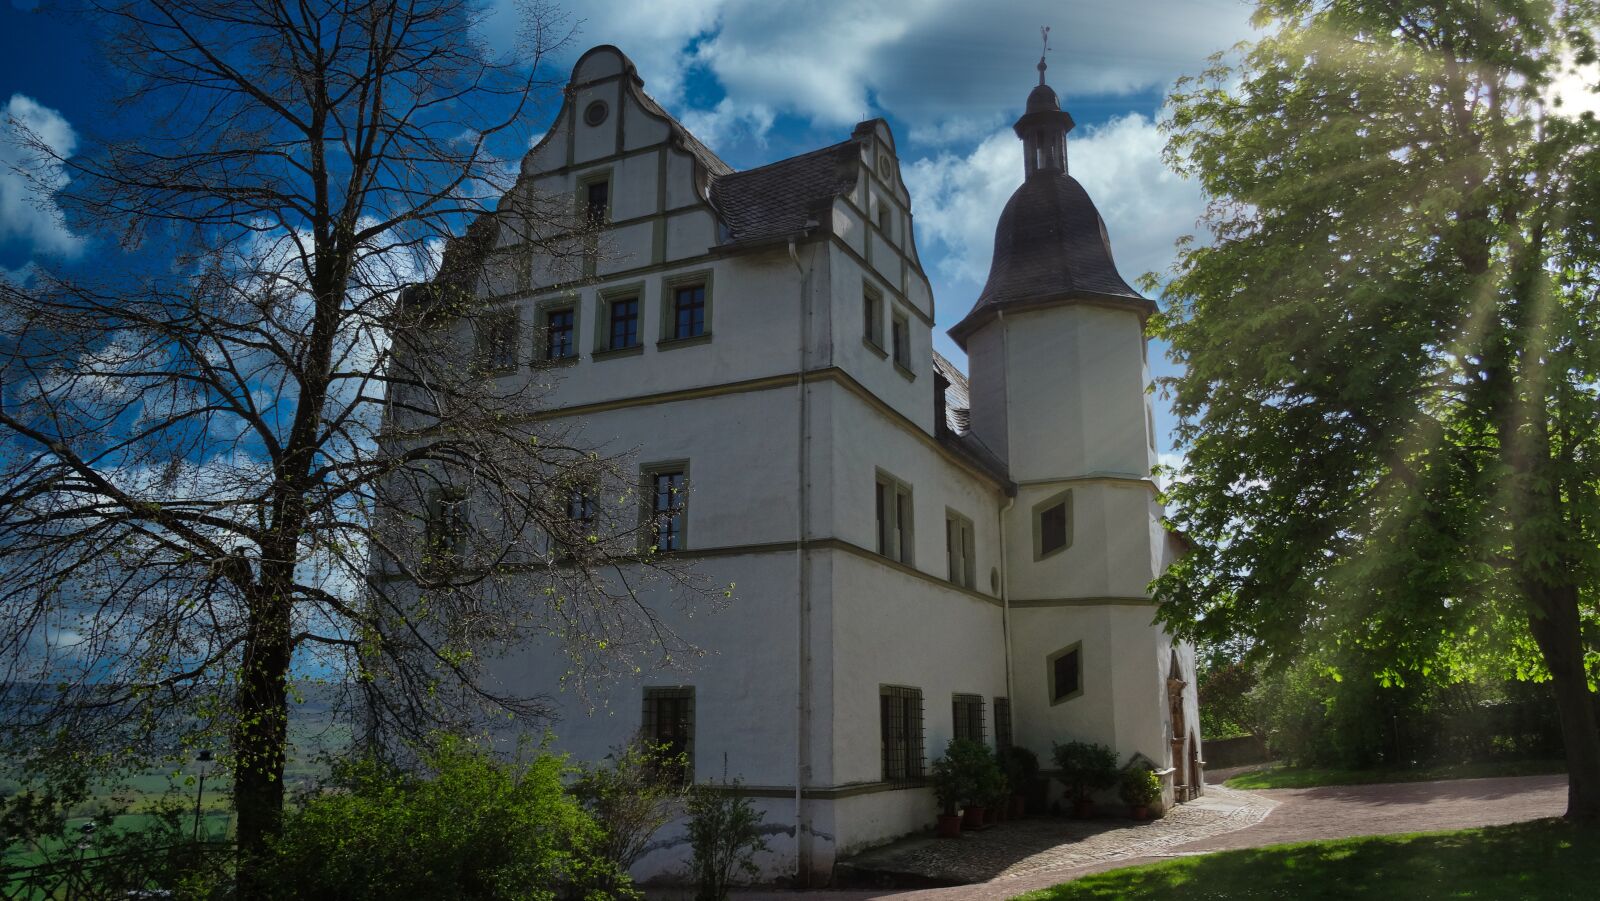 Sony DSC-HX50 sample photo. Castles of dornburg, castle photography